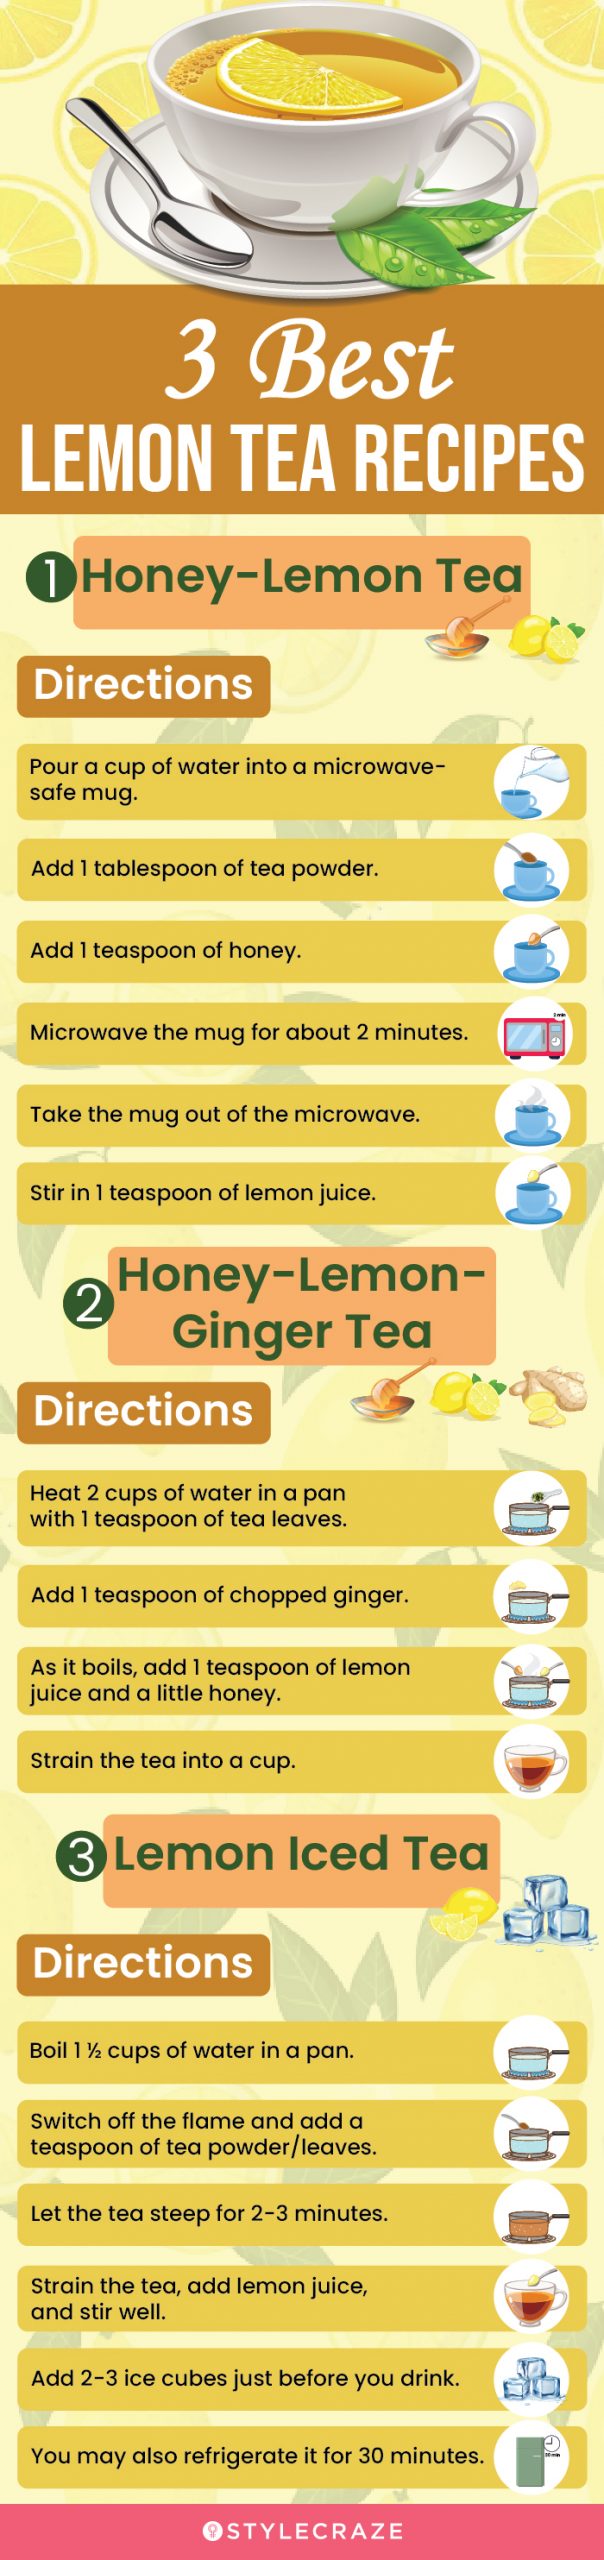 3 best lemon tea recipes (infographic)